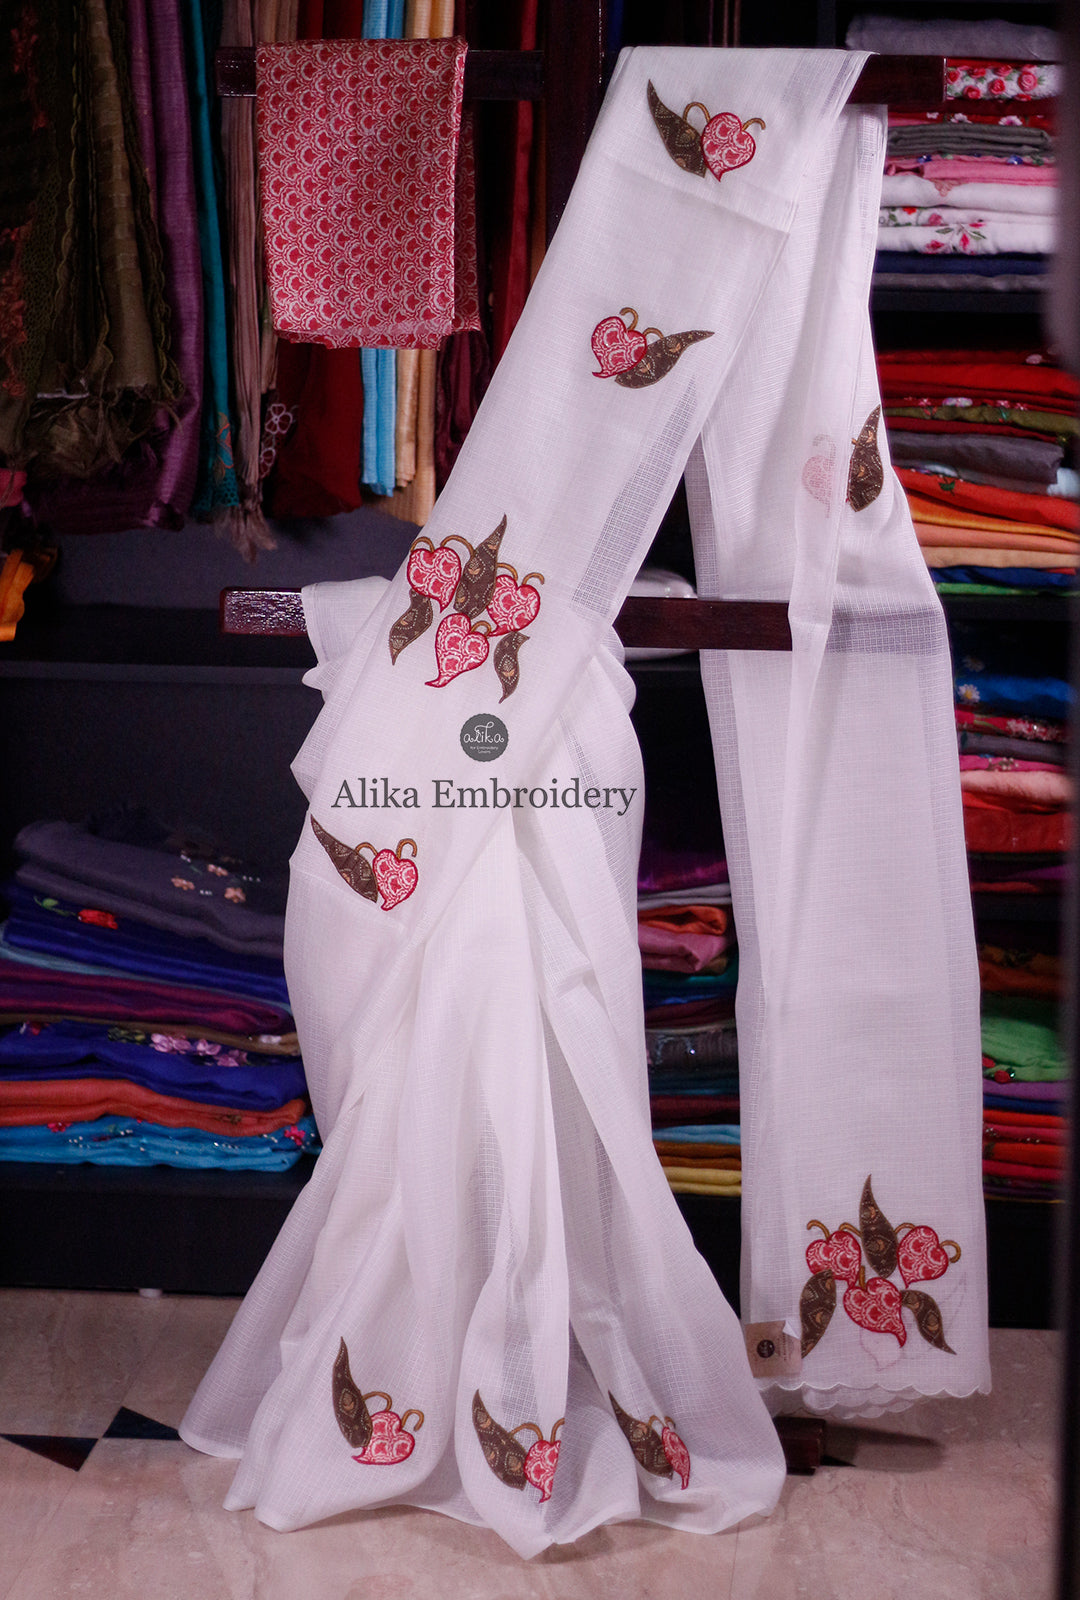 OFFWHITE checked silky kota saree with applique work